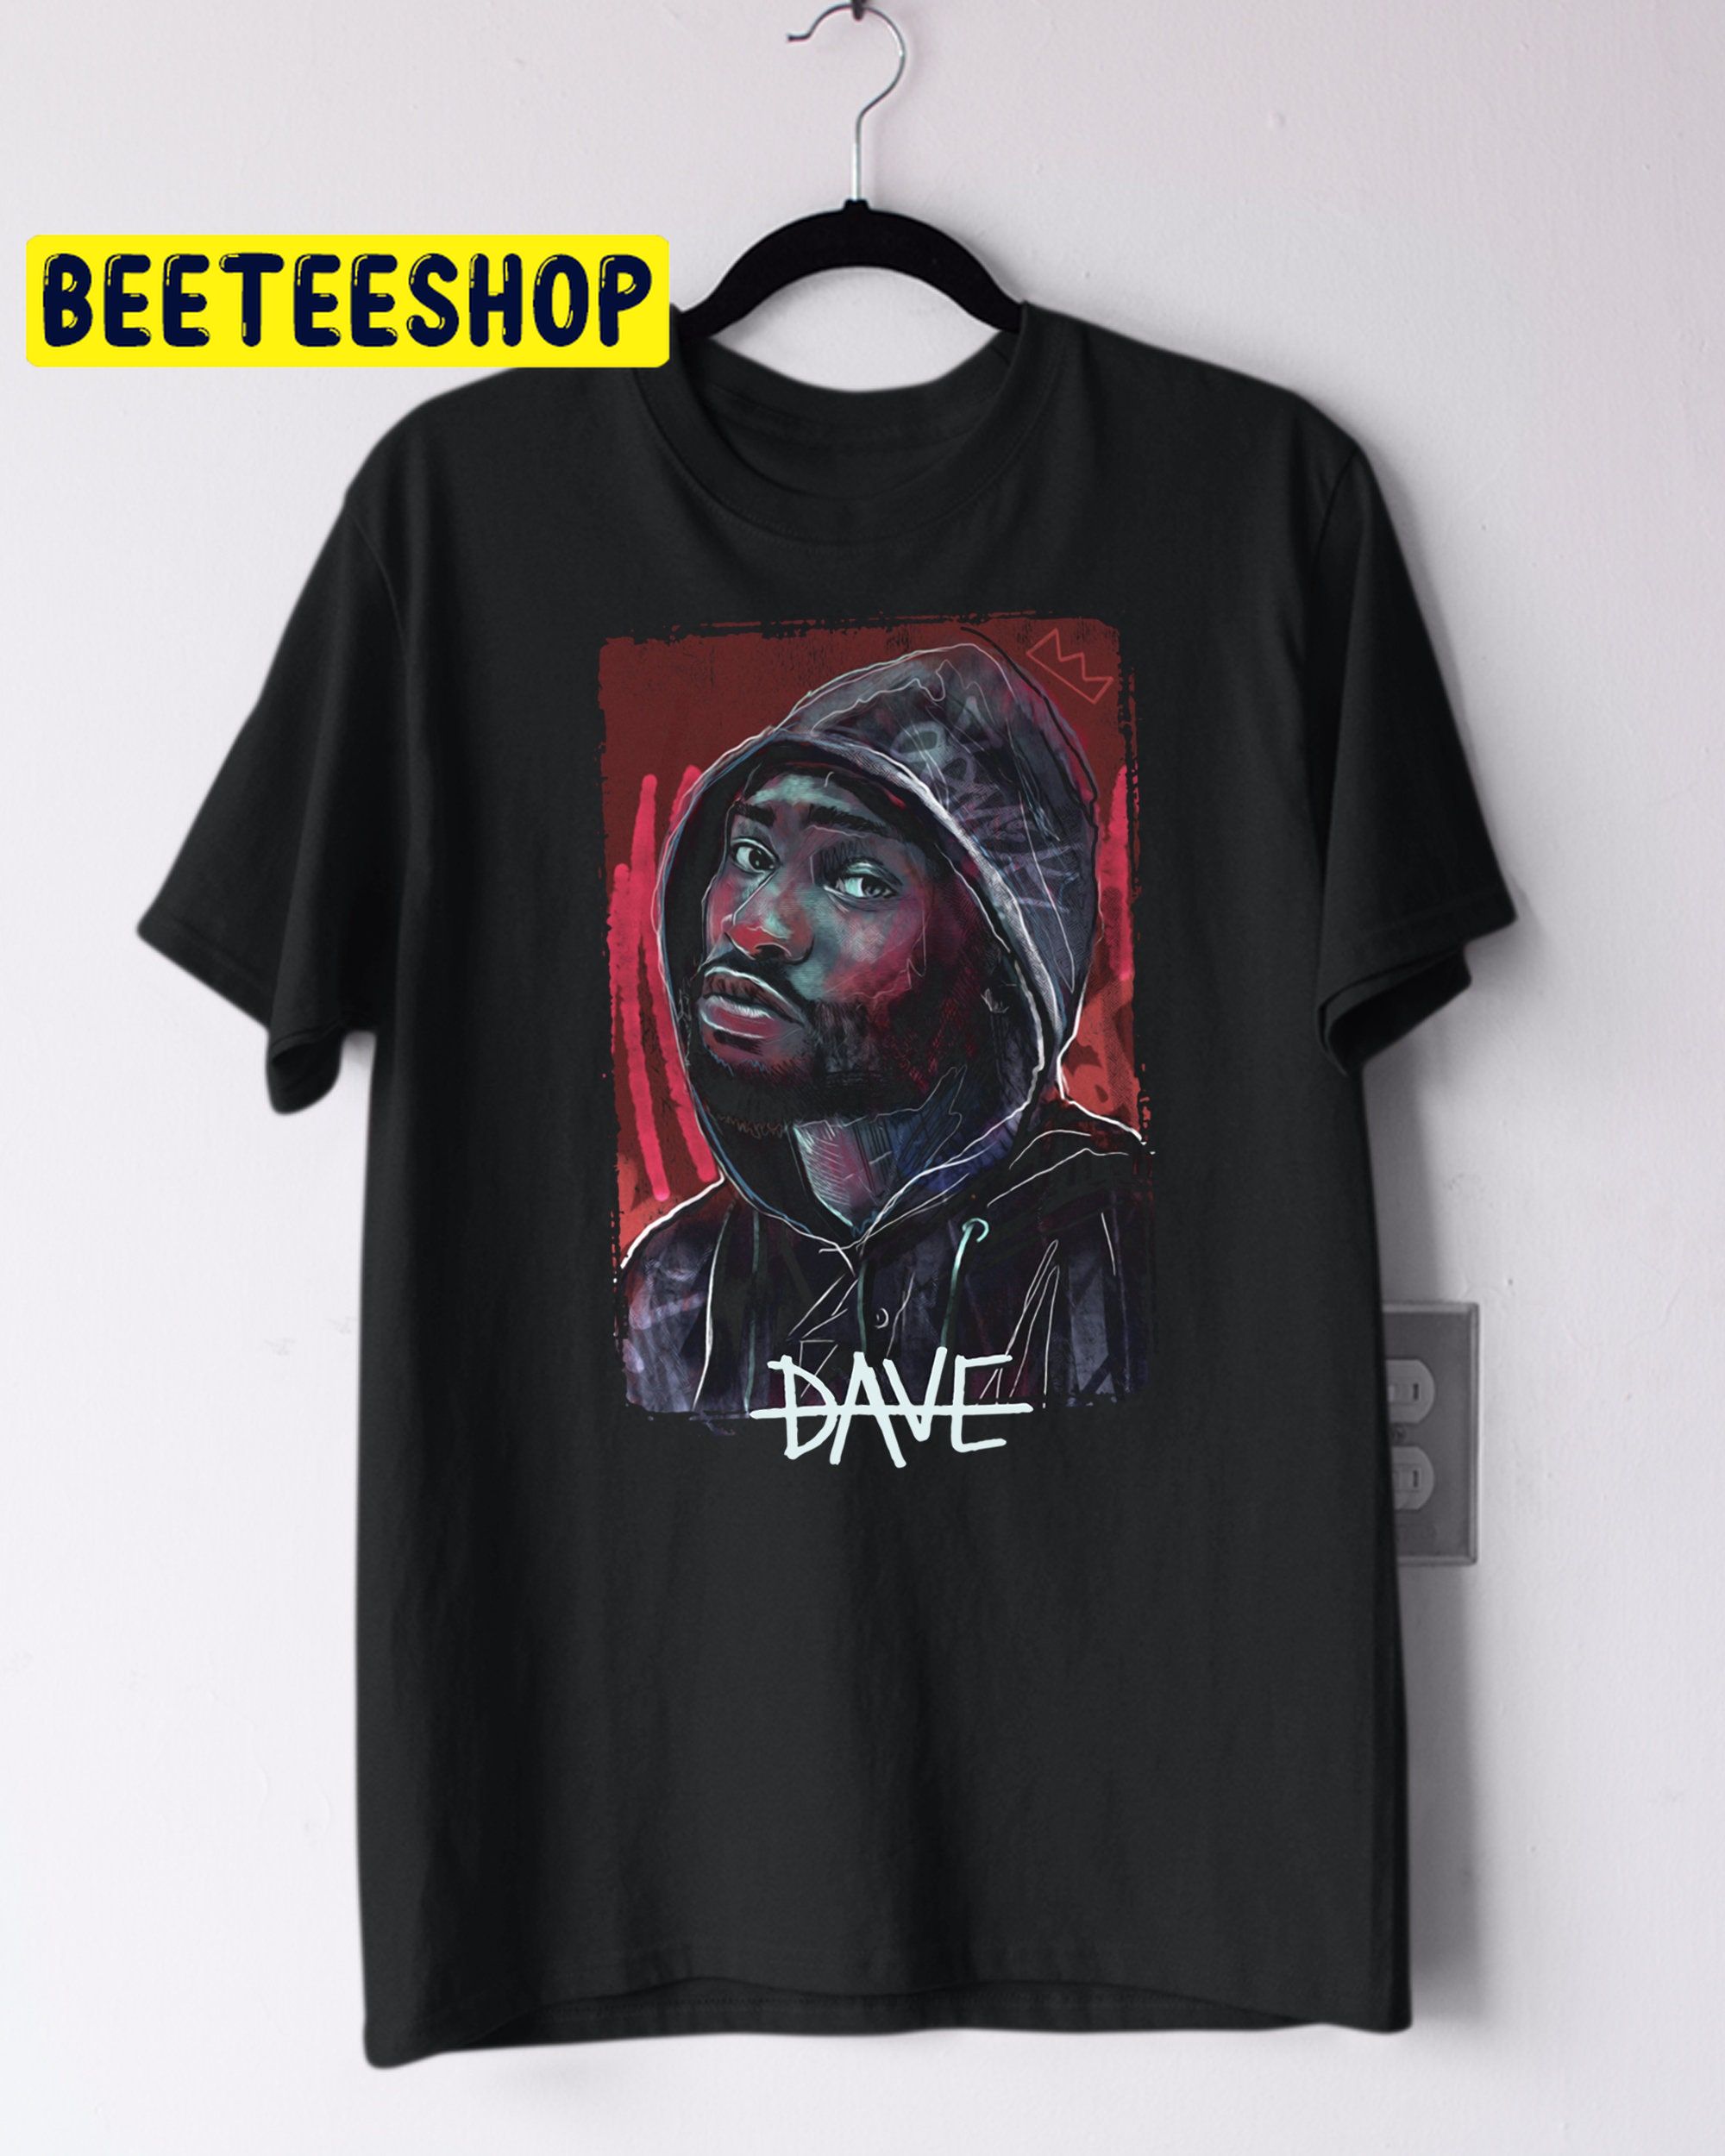 Santan Dave British Rapper Trending Unisex Shirt - Beeteeshop